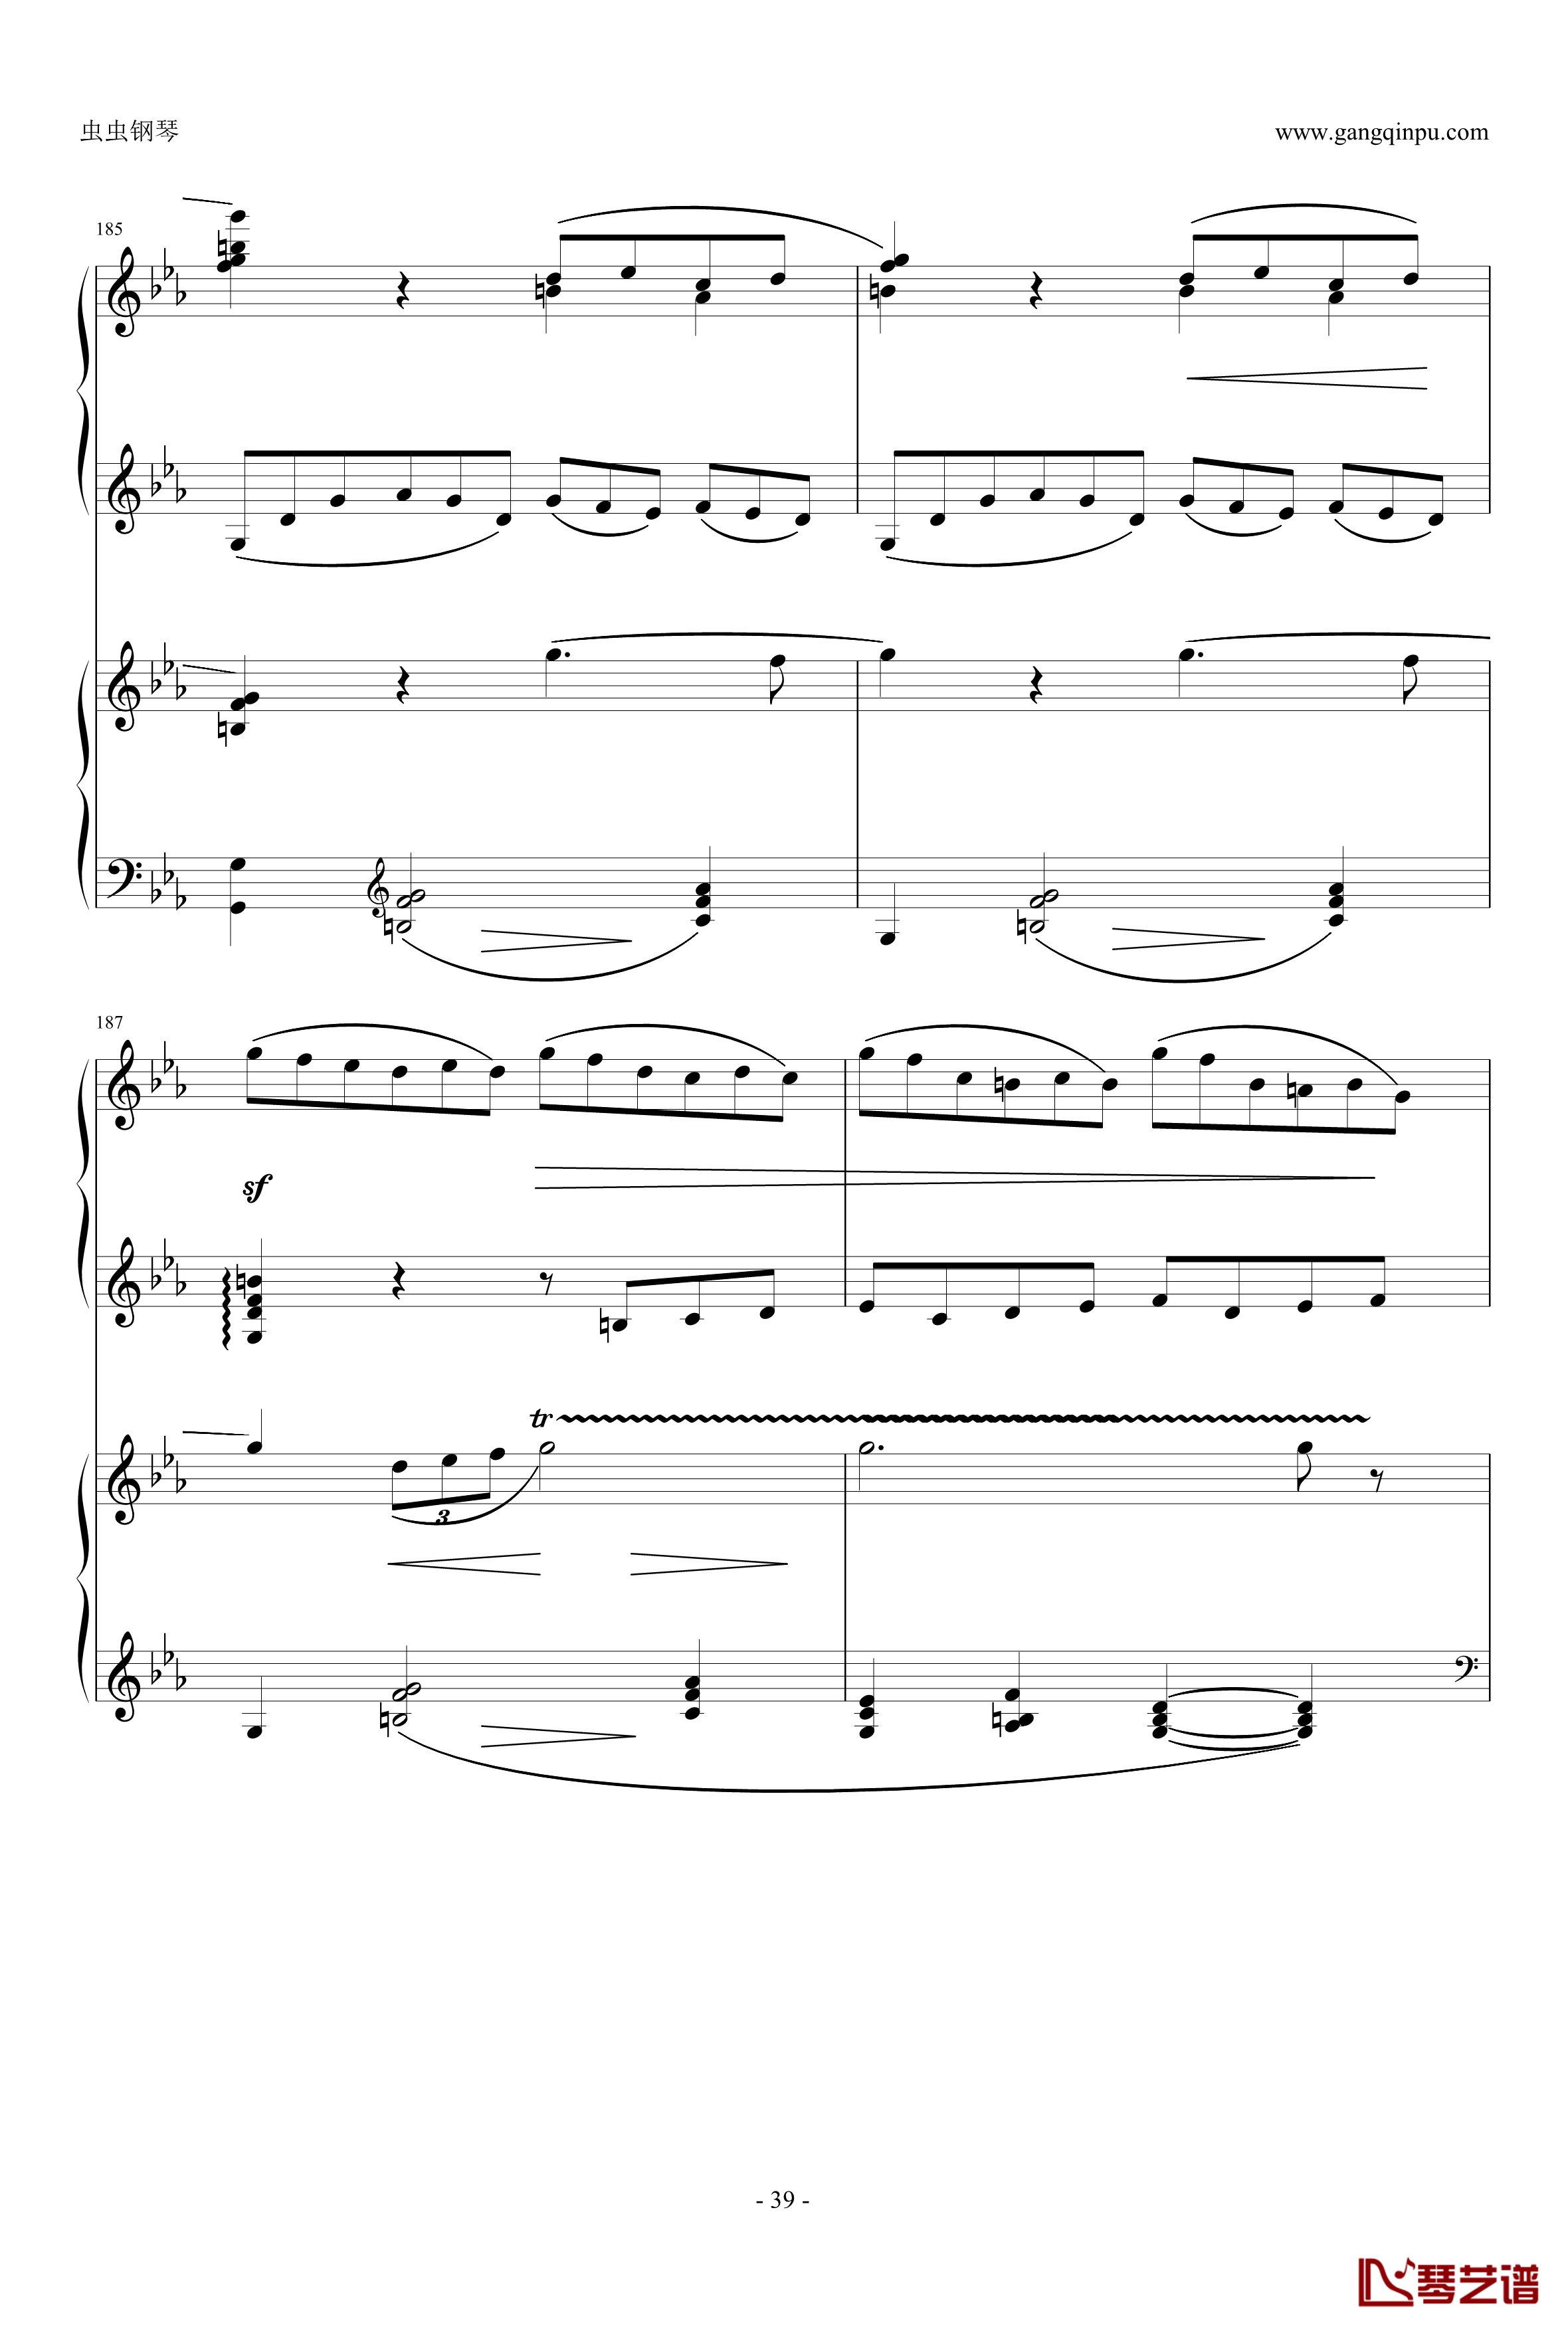 c小调第2钢琴协奏曲钢琴谱-拉赫马尼若夫39